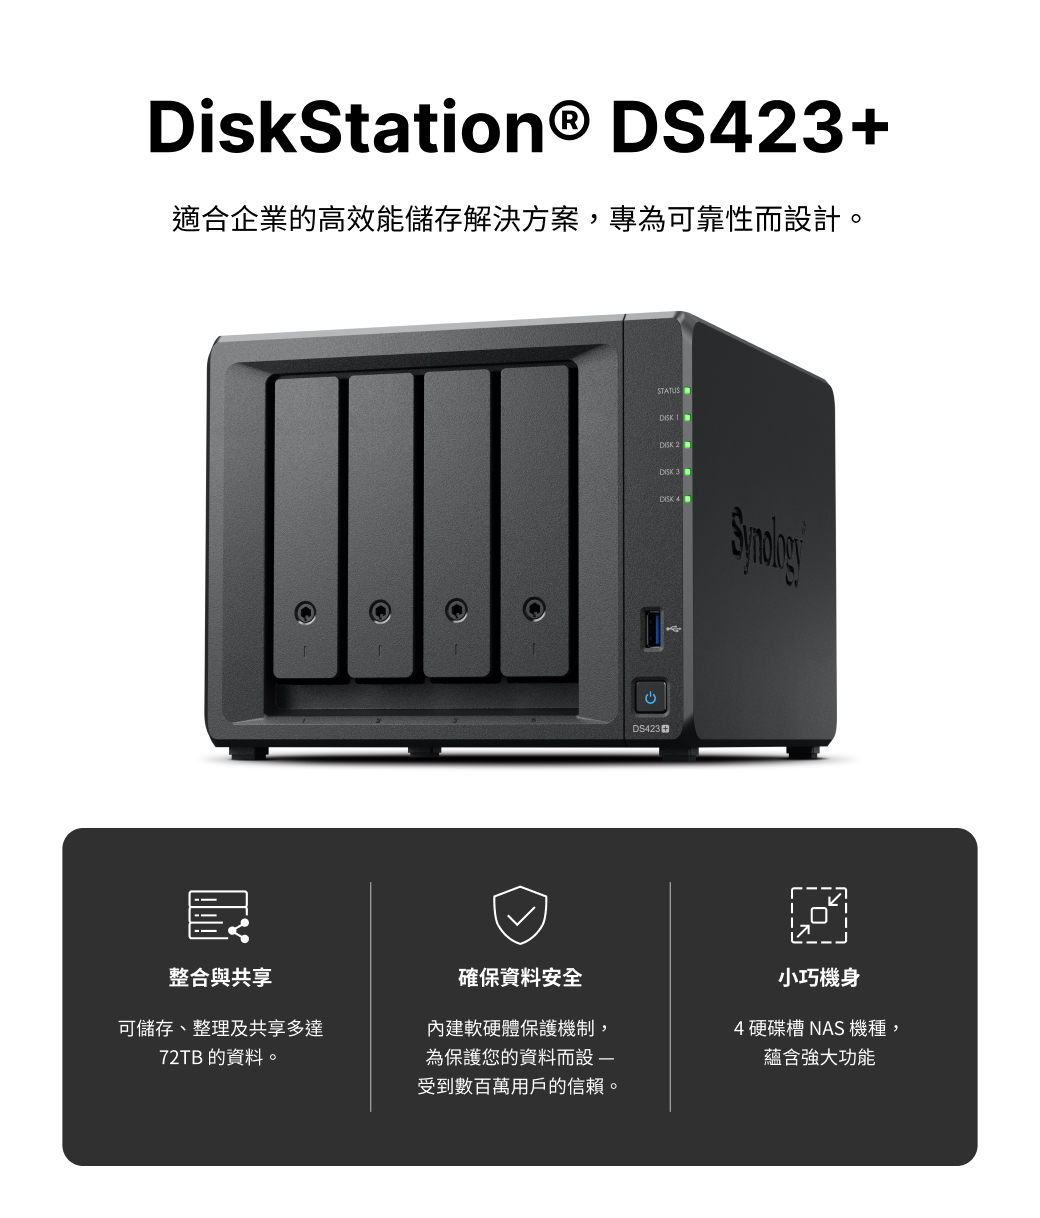 DiskStation® DS423+適合企業的高效能儲存解決方案,專為可靠性而計。整合與共享確保資料安全可儲存、整理及共享多達72TB 的資料。內建軟硬體保護機制,為保護您的資料而設 受到數百萬用戶的信賴。STATUSDISKDISK 2DS423小巧機身4 硬碟槽 NAS 機種,蘊含強大功能